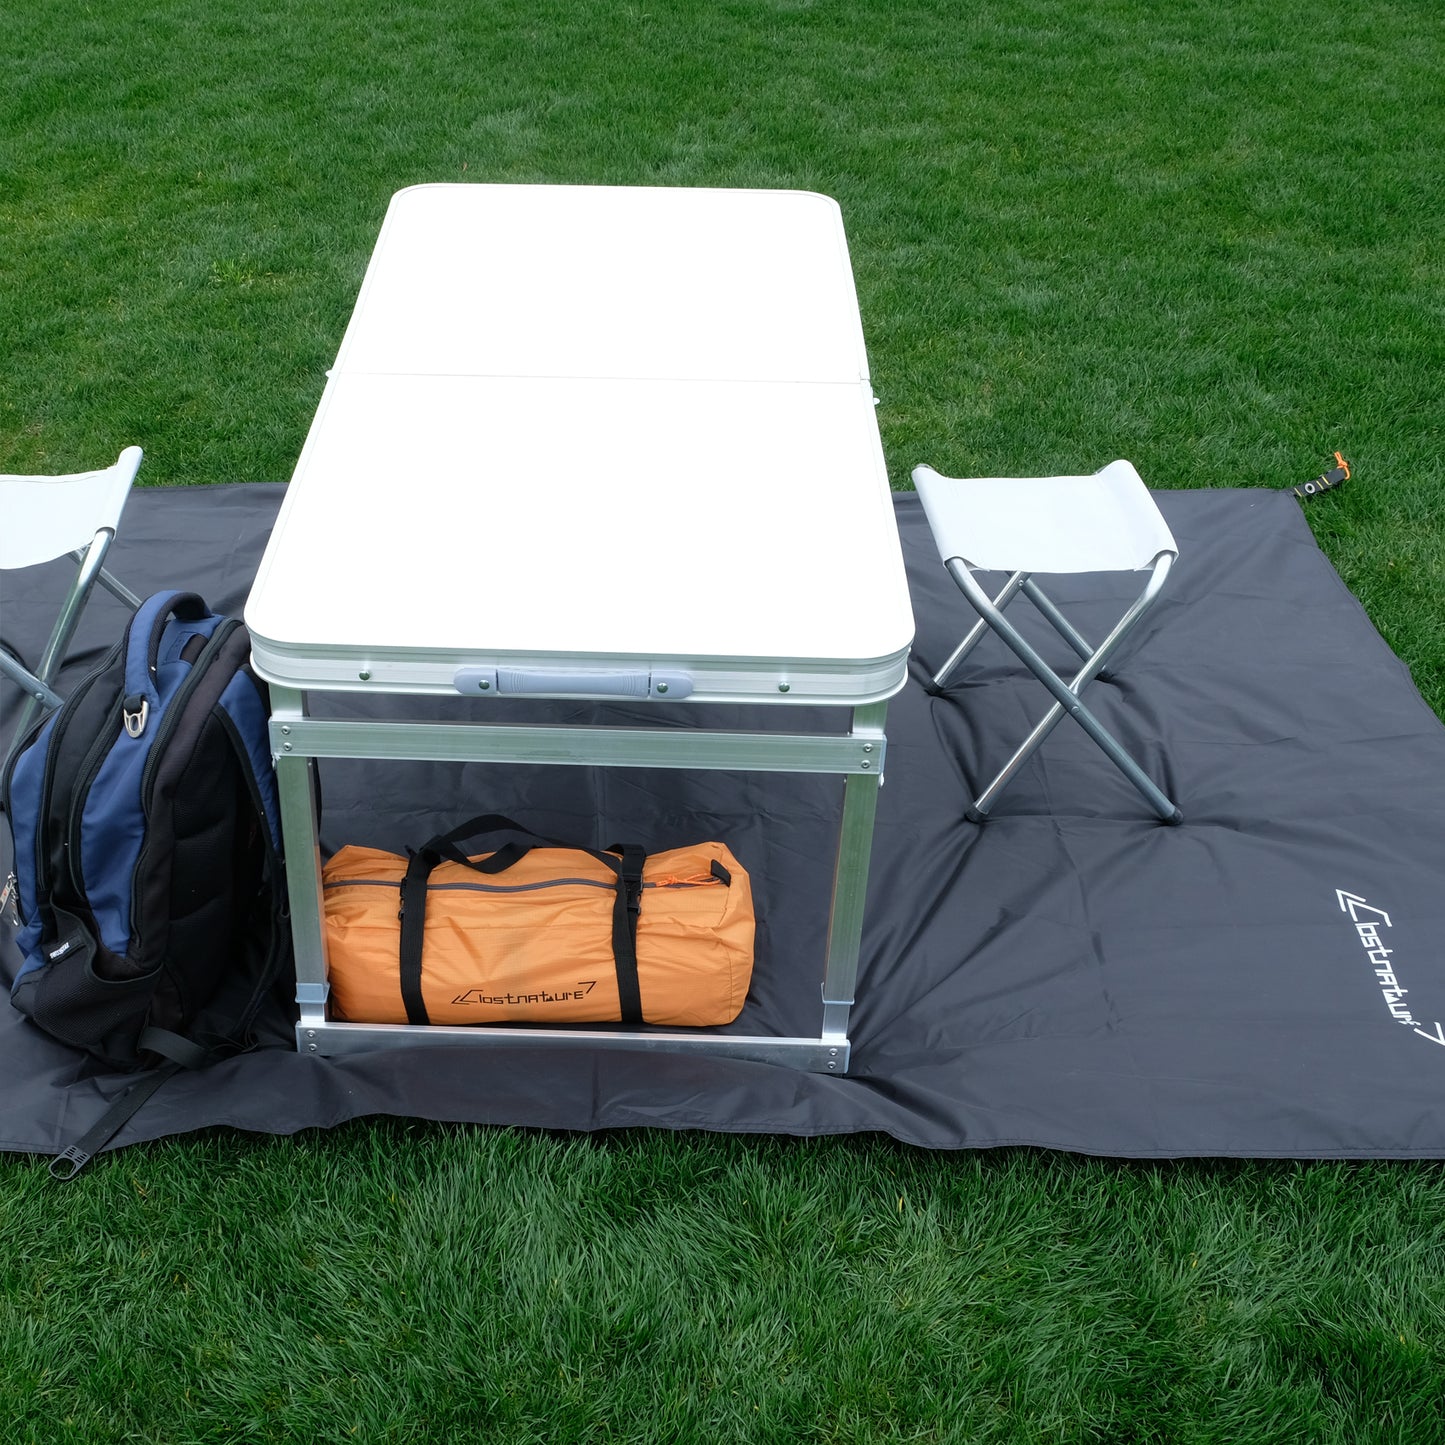 Clostnature 1-Person Tent Footprint - Waterproof Camping Tarp, Ultralight Ground Sheet Mat for Hiking, Backpacking, Hammock, Beach - Storage Bag Included